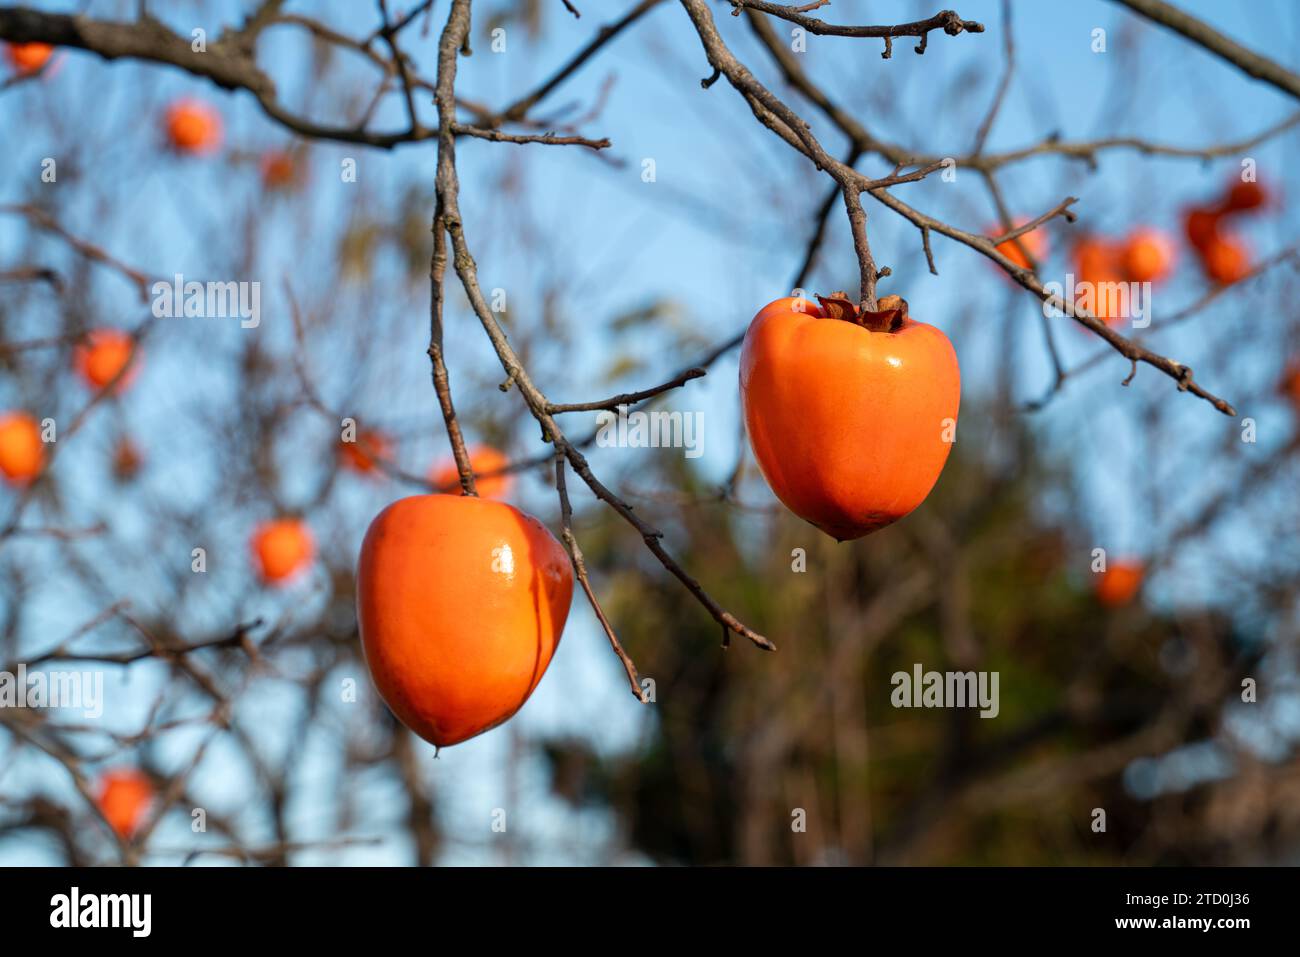 Ripe orange persimmon hanging on a tree branch, autumn harvest season concept. Stock Photo